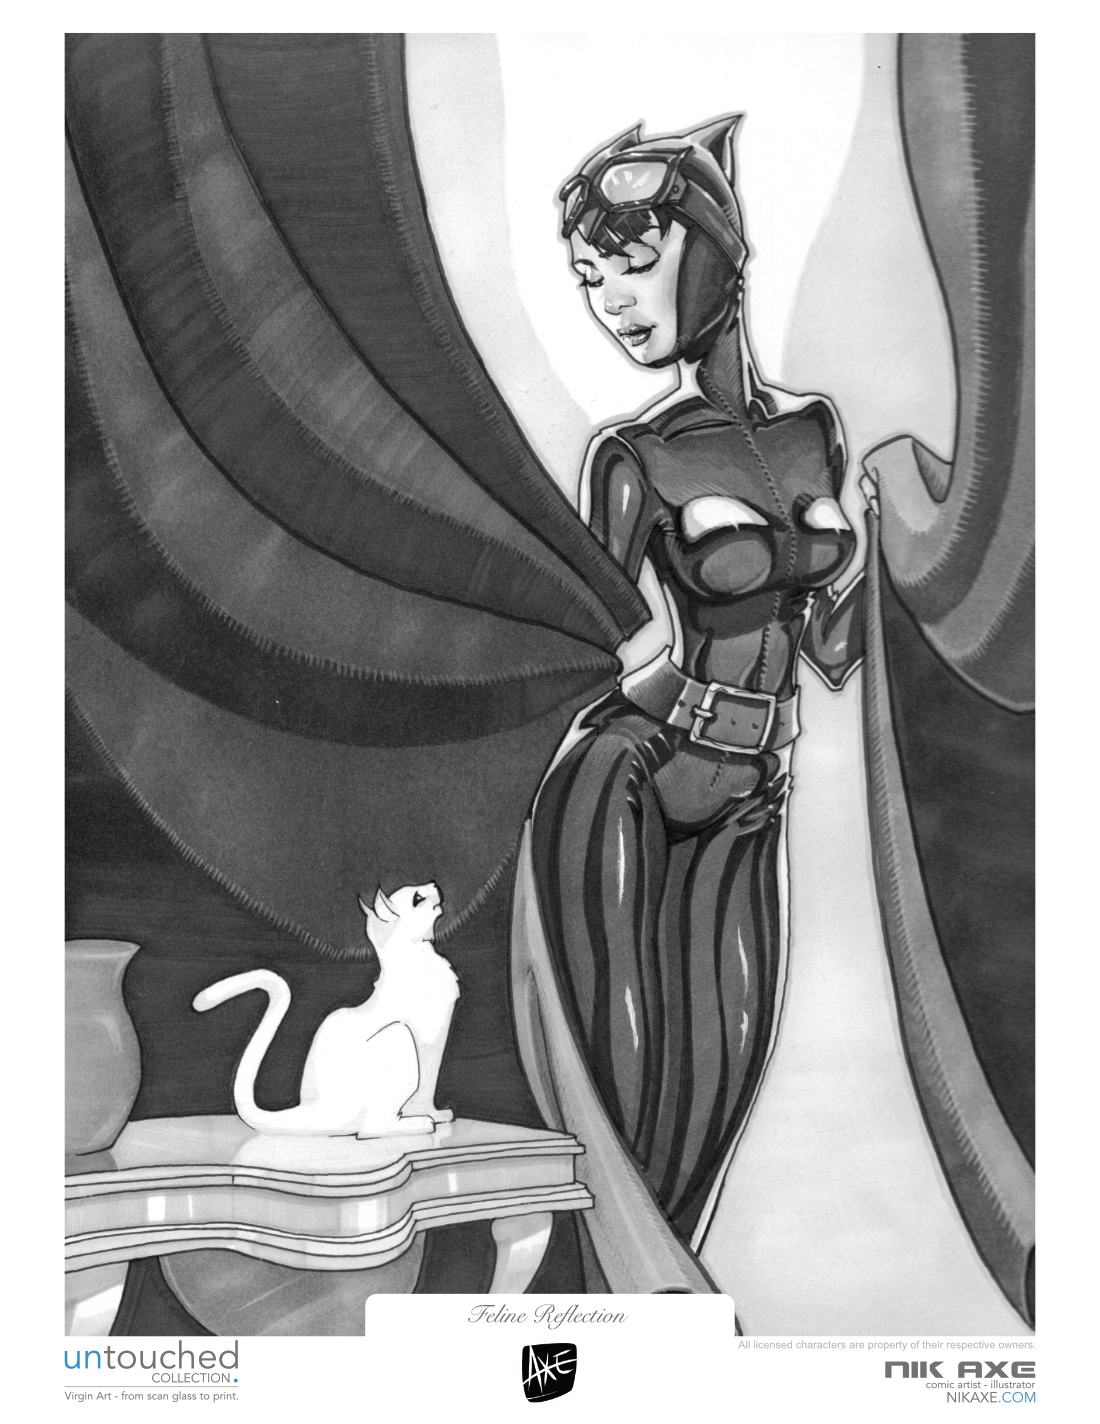 Catwoman Art Print Batman DC Comics Feline Reflection